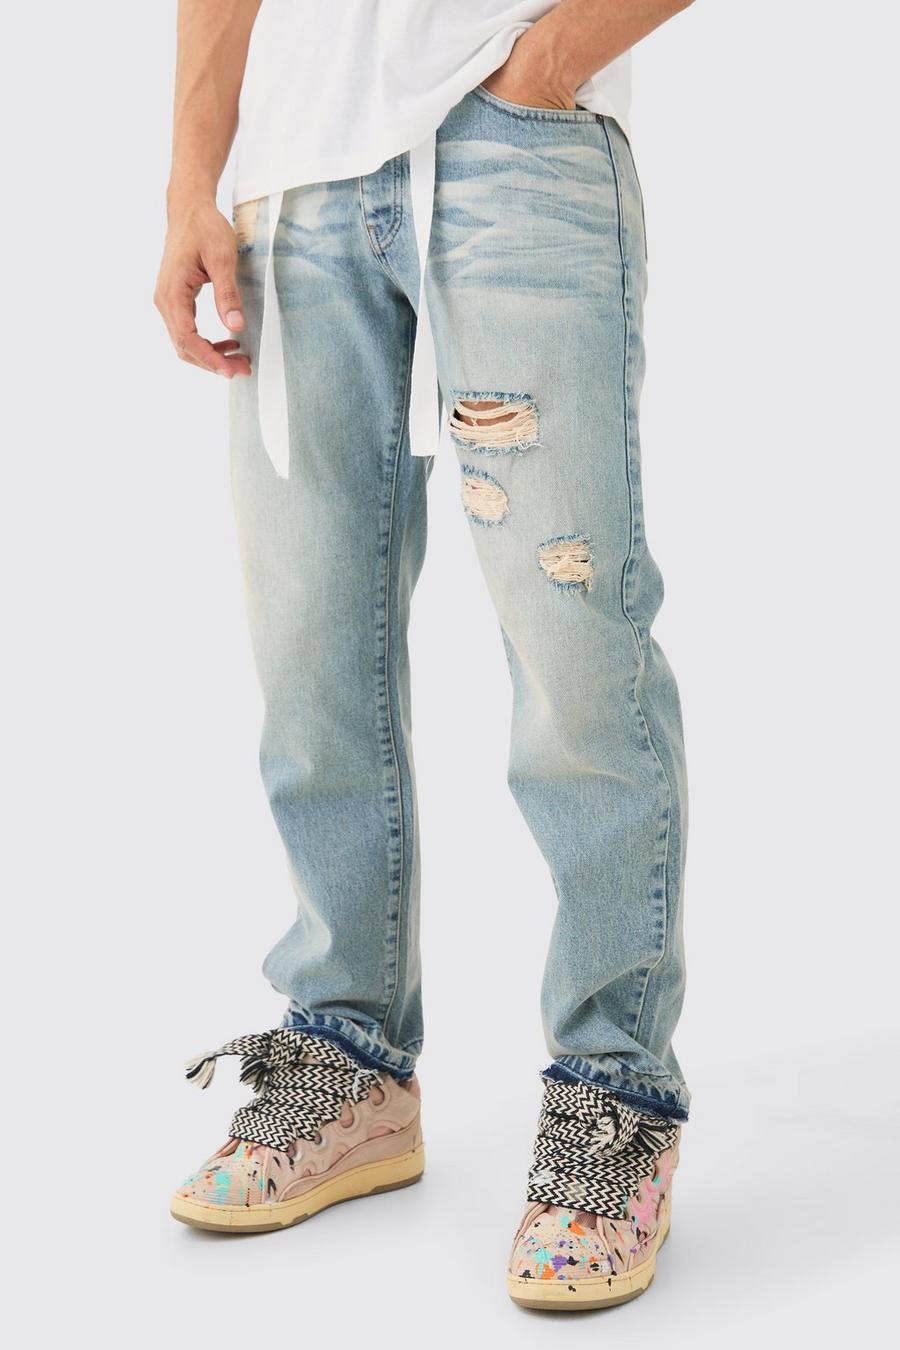 Lockere zerrissene Jeans mit Kordelzug in Antikblau, Antique blue image number 1